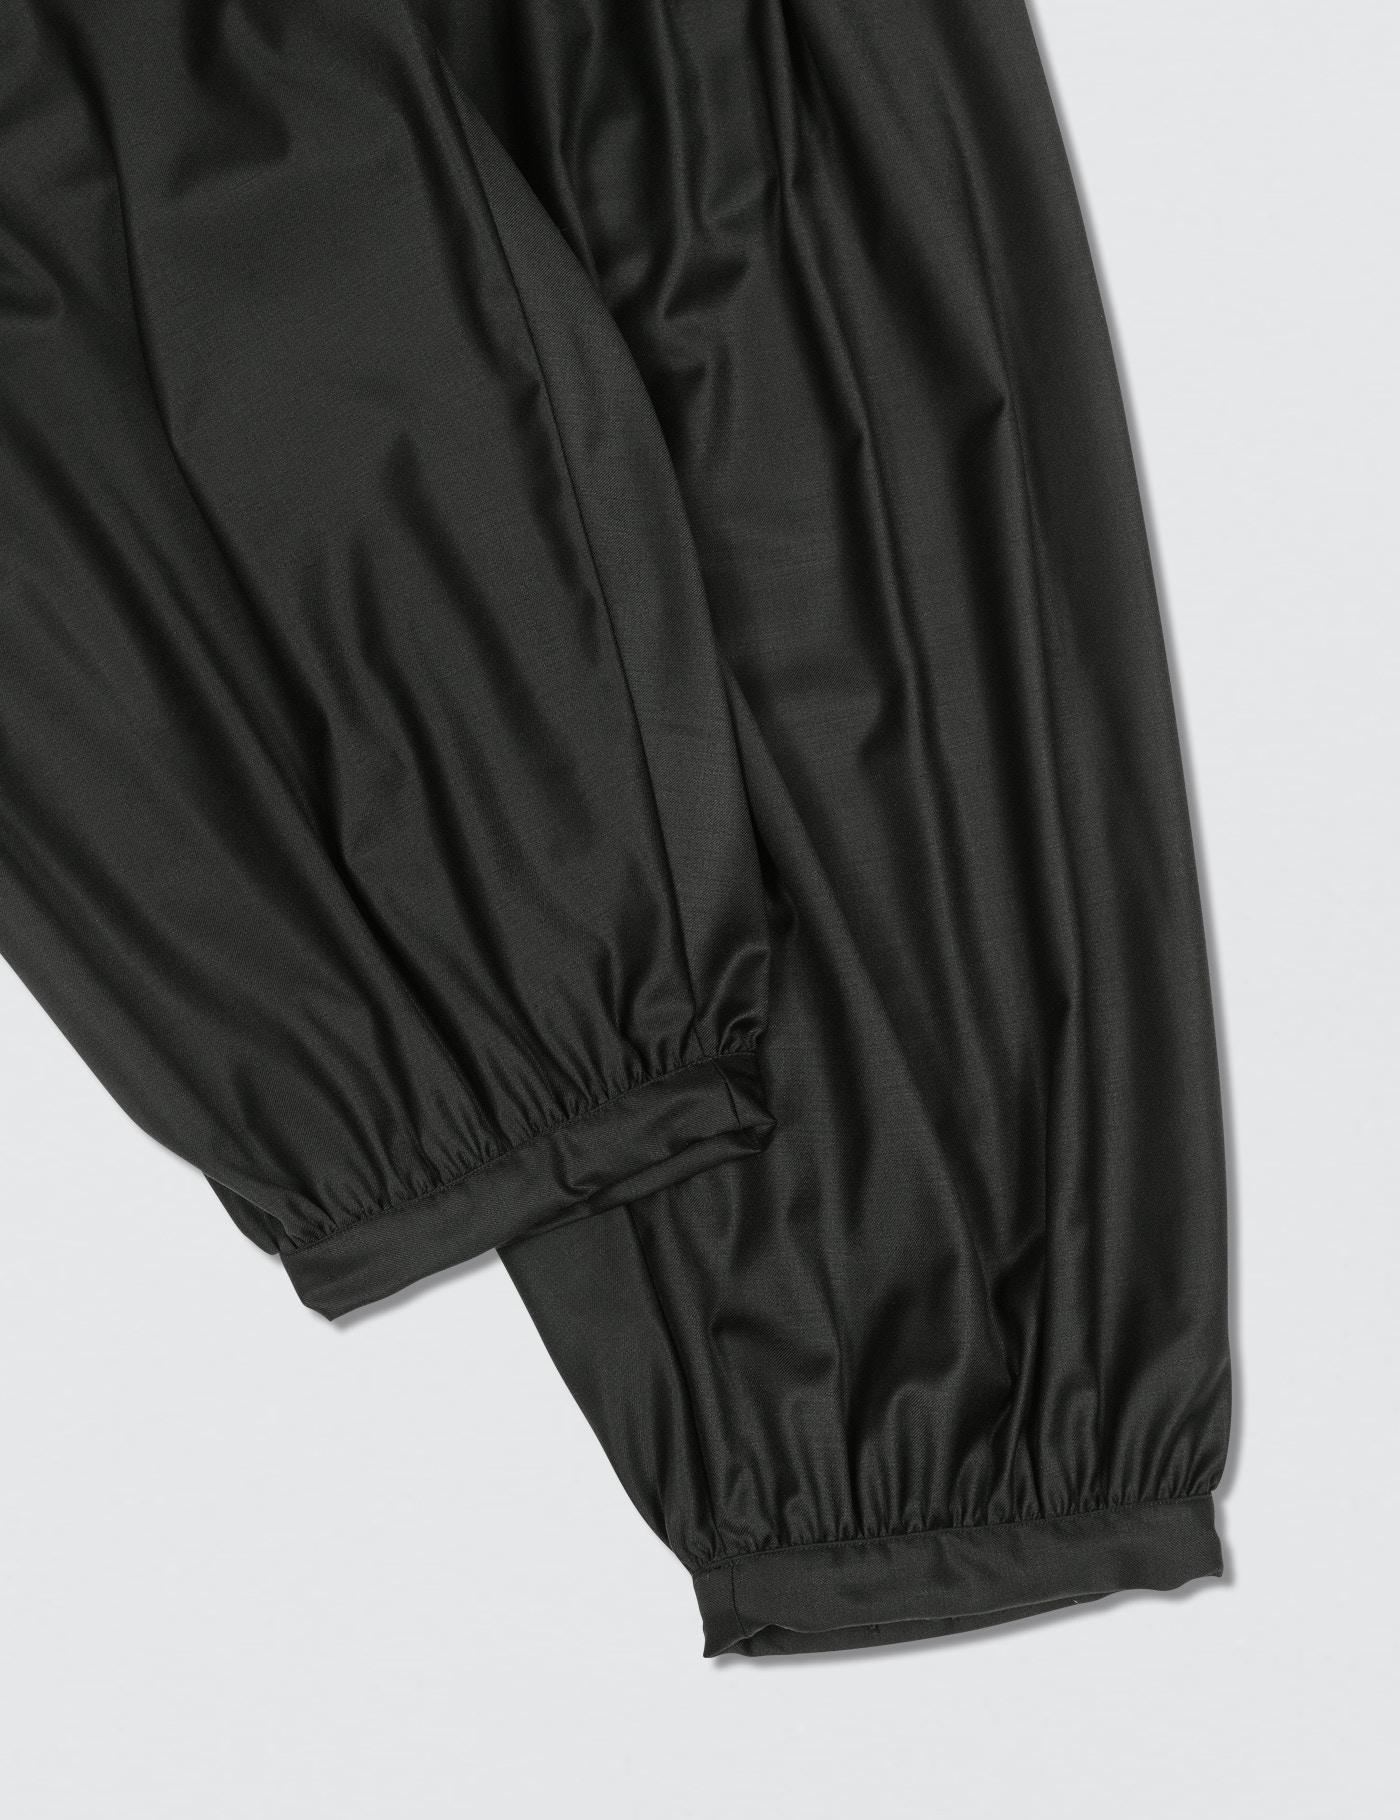 Sasquatchfabrix Wool Balloon Pants in Black for Men - Lyst